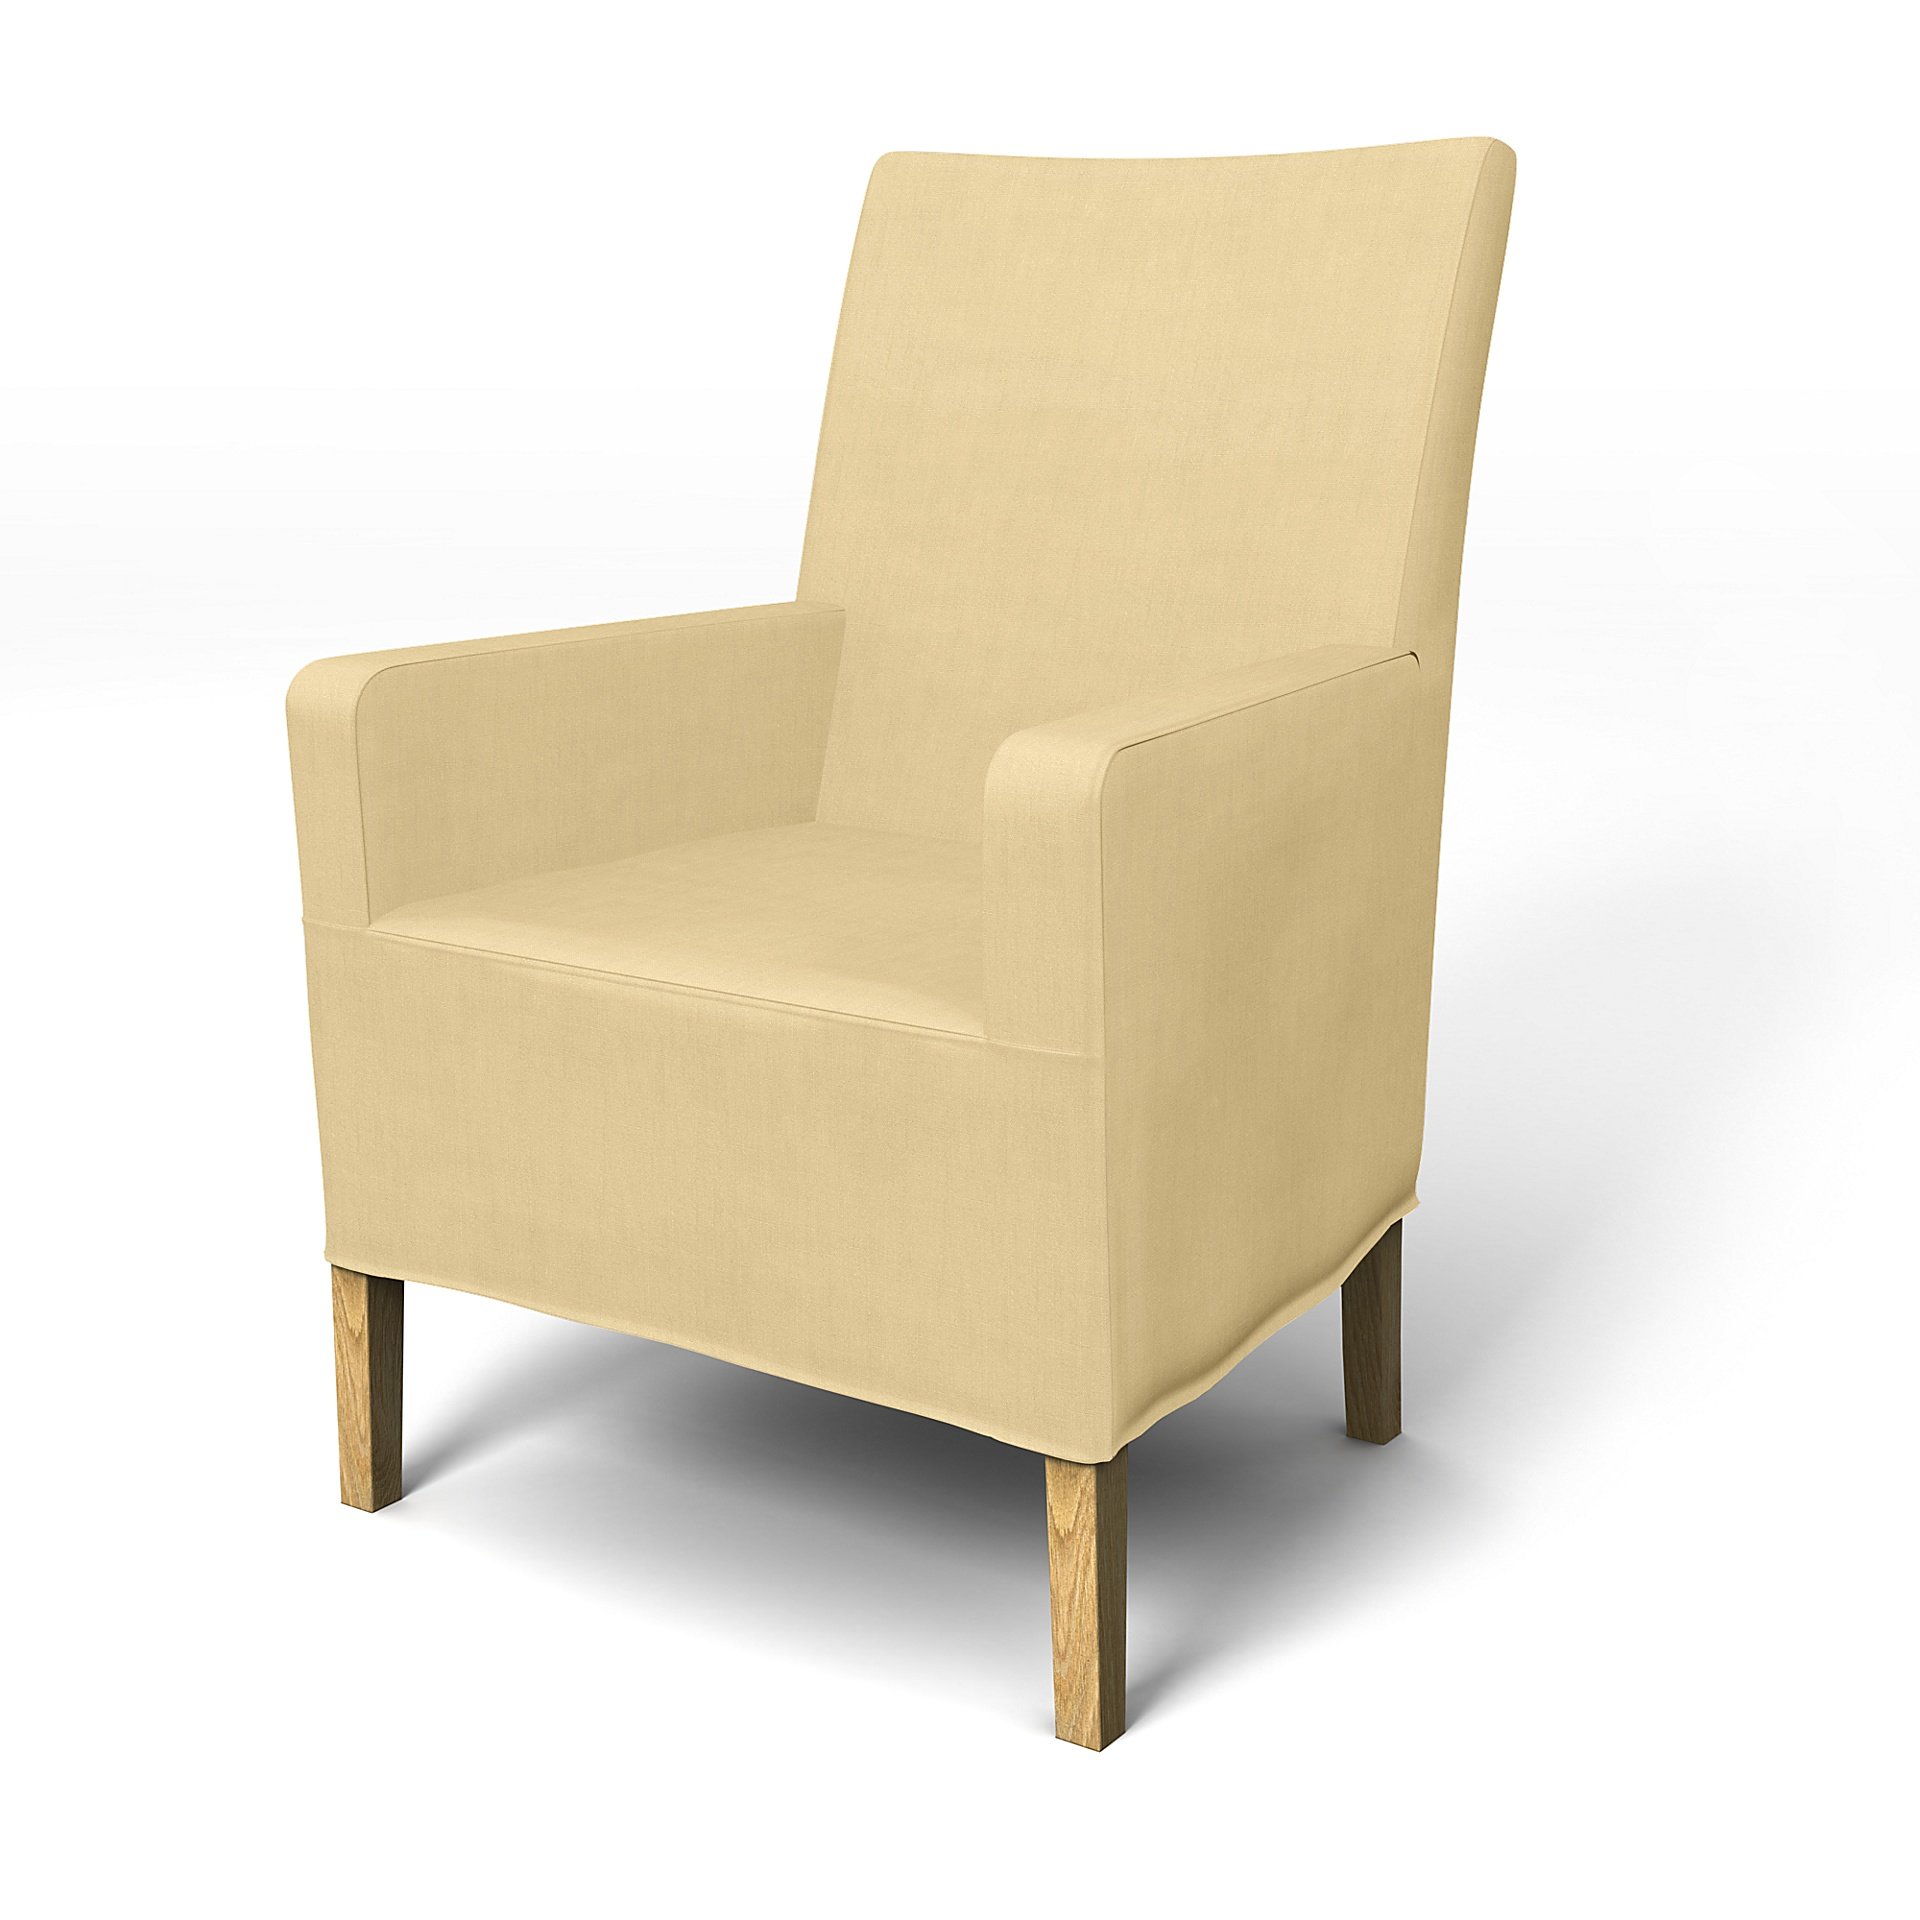 IKEA - Henriksdal, Chair cover w/ armrest, medium length skirt, Straw Yellow, Linen - Bemz